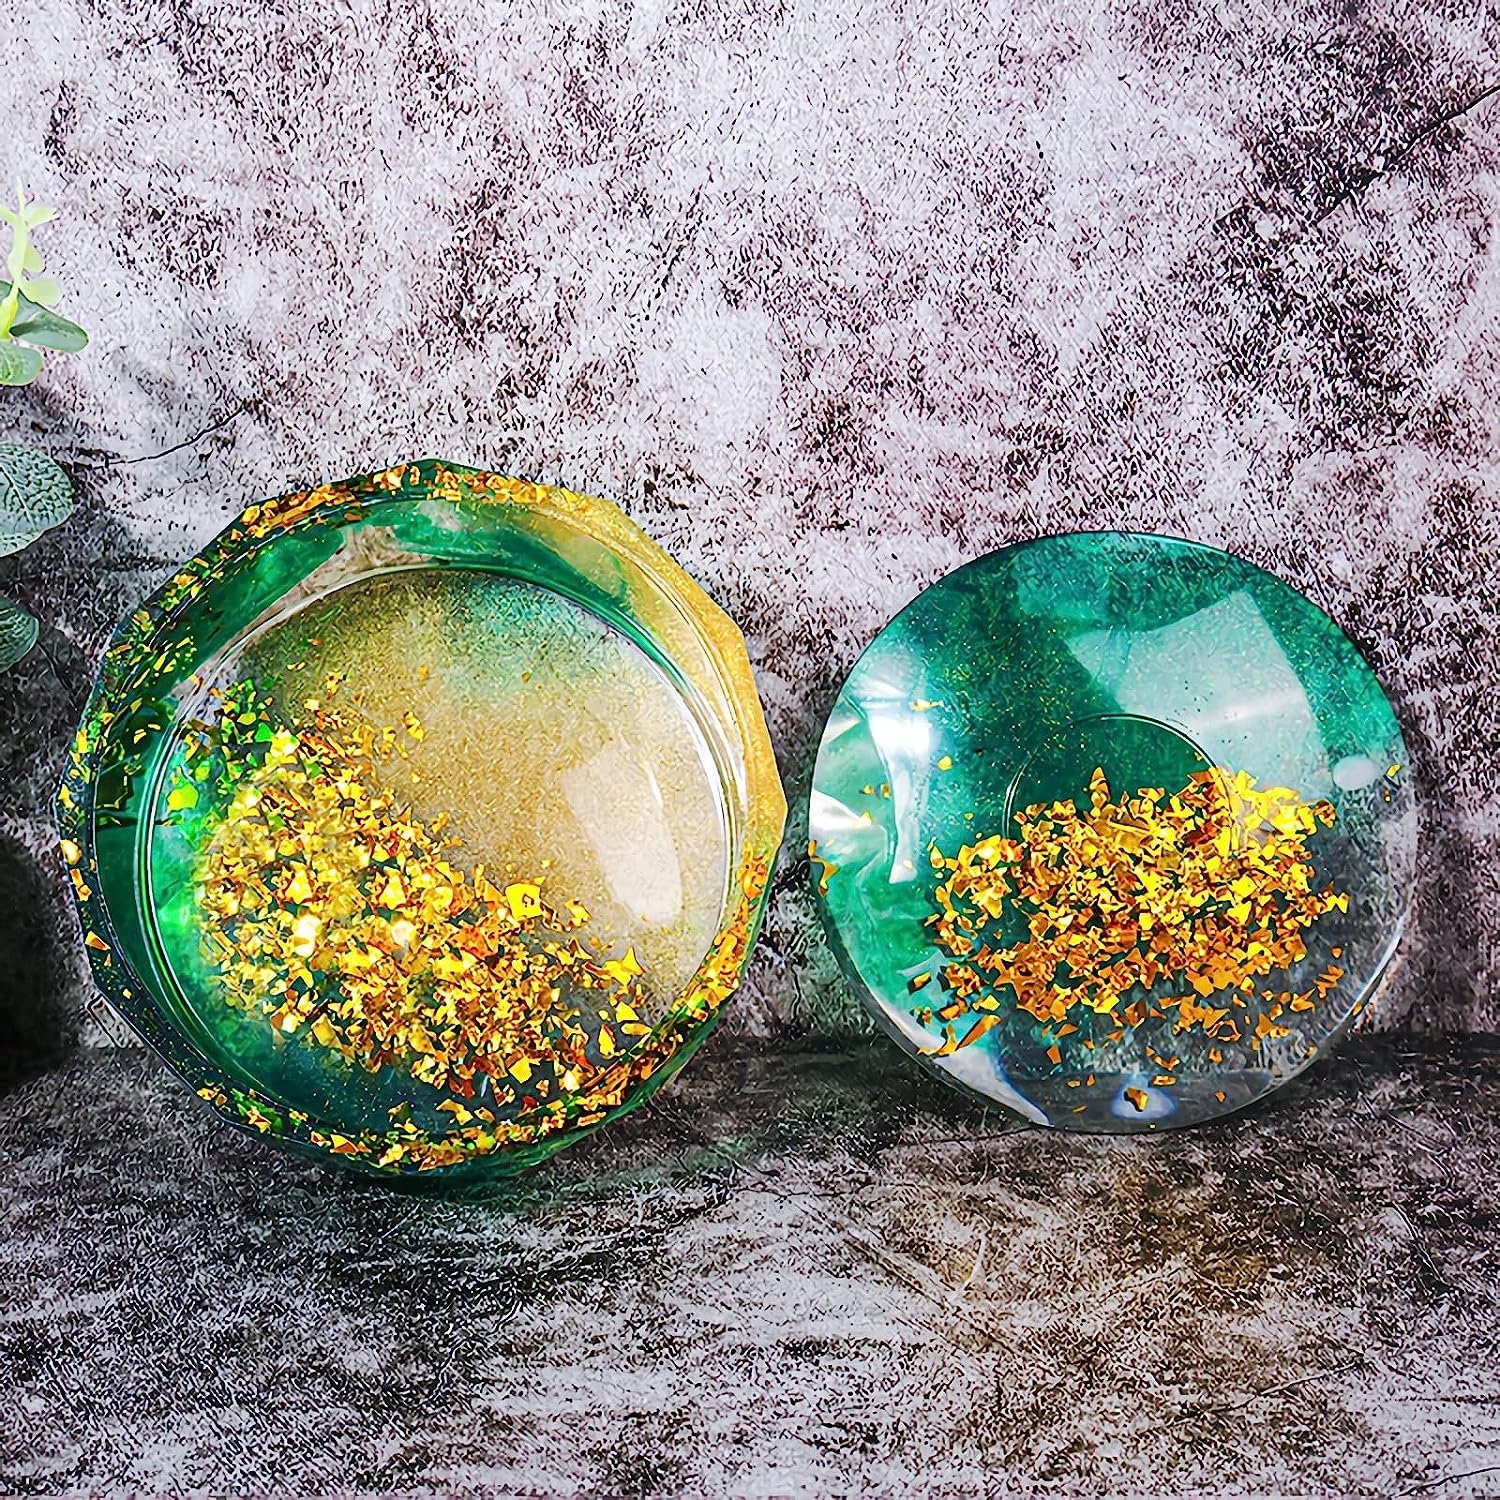 2PCS Glass Storage Jar Christmas Tree Decorative Box Wedding Jars Snack Candy  Organizer Xmas Festival Desktop